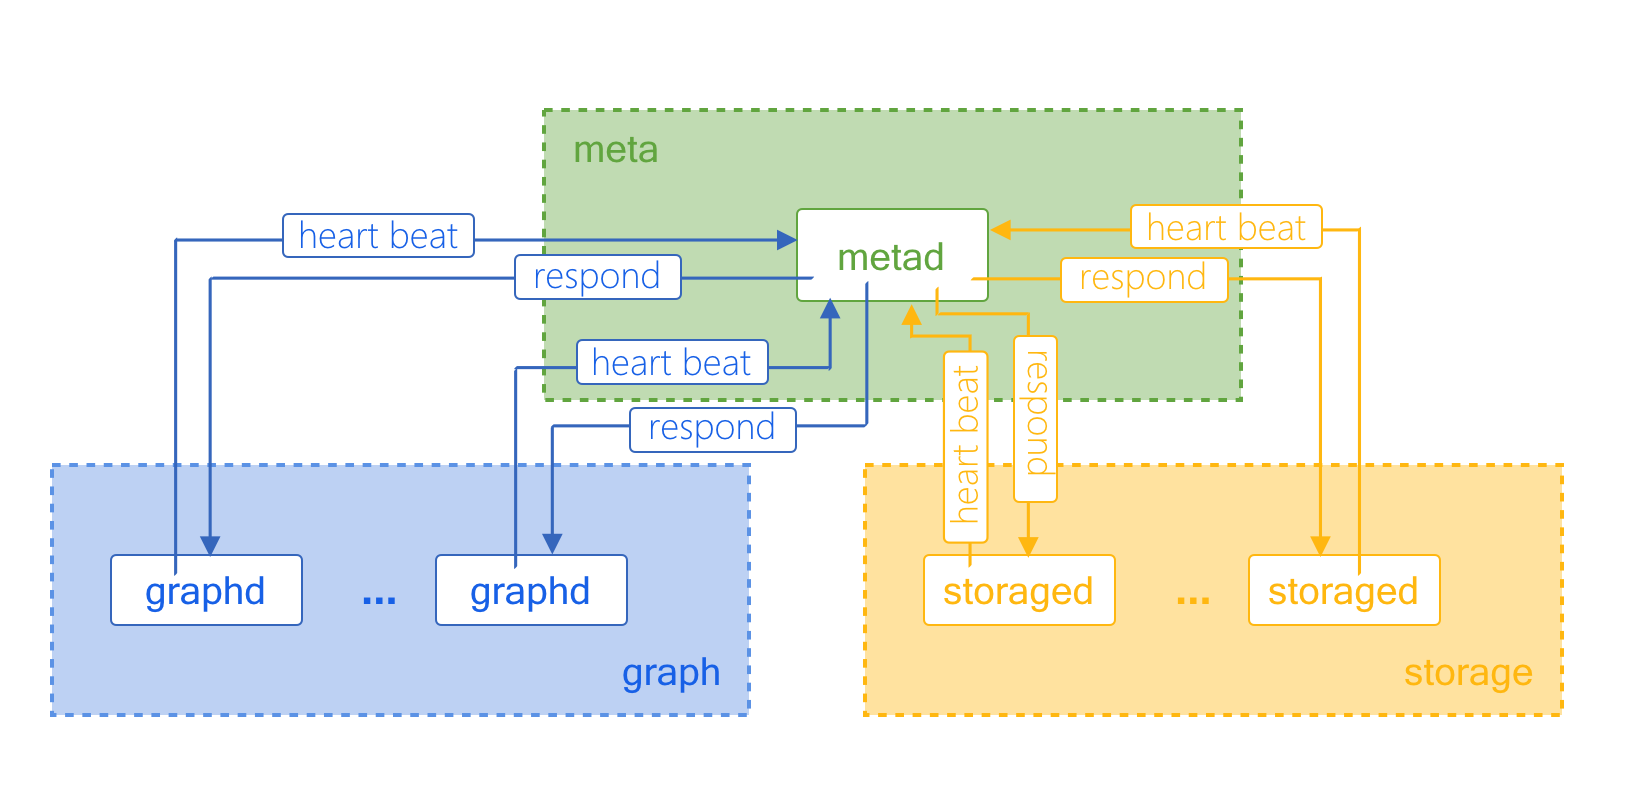 metad storaged graphd 通信